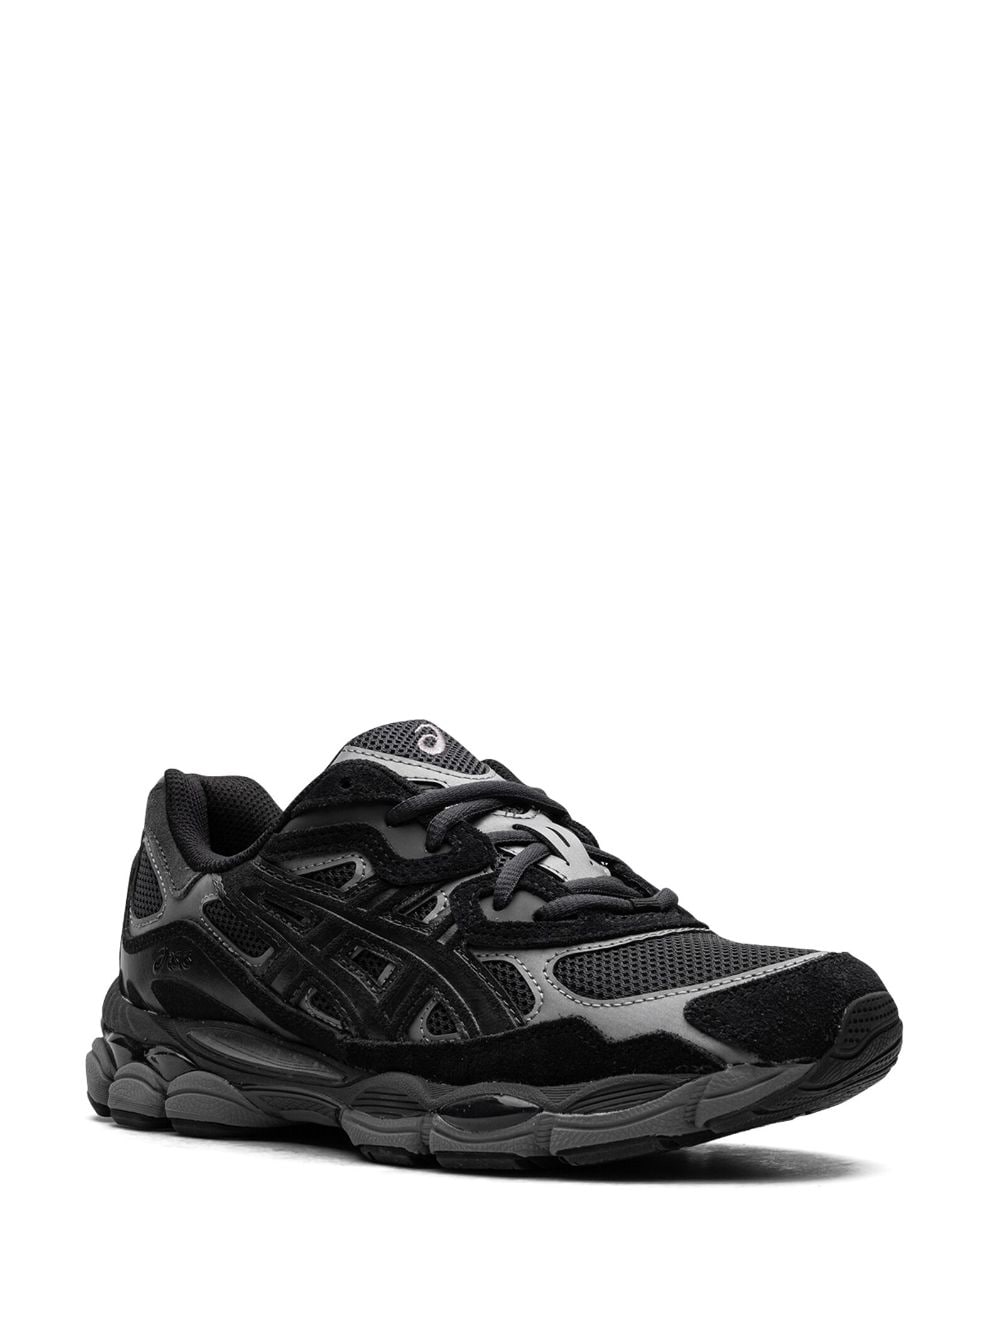 Shop Asics Gel Nyc "graphite Grey Black" Sneakers